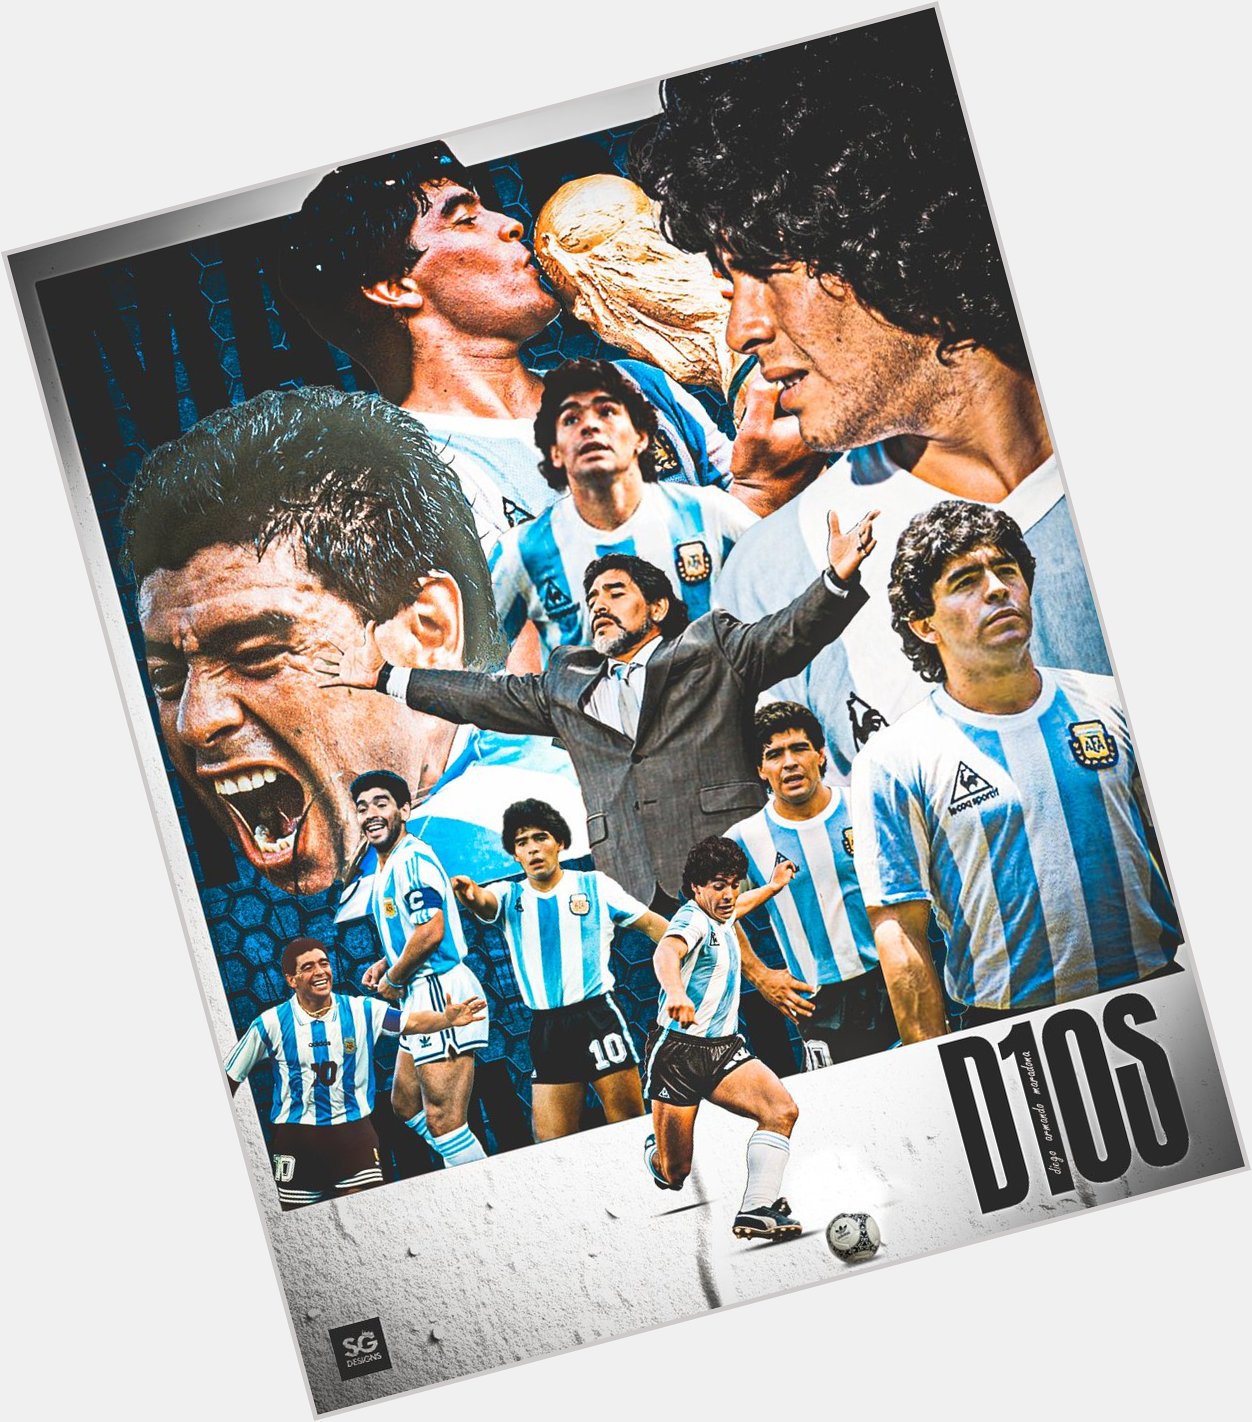 He would have been 61
Happy Birthday Diego Armando Maradona  